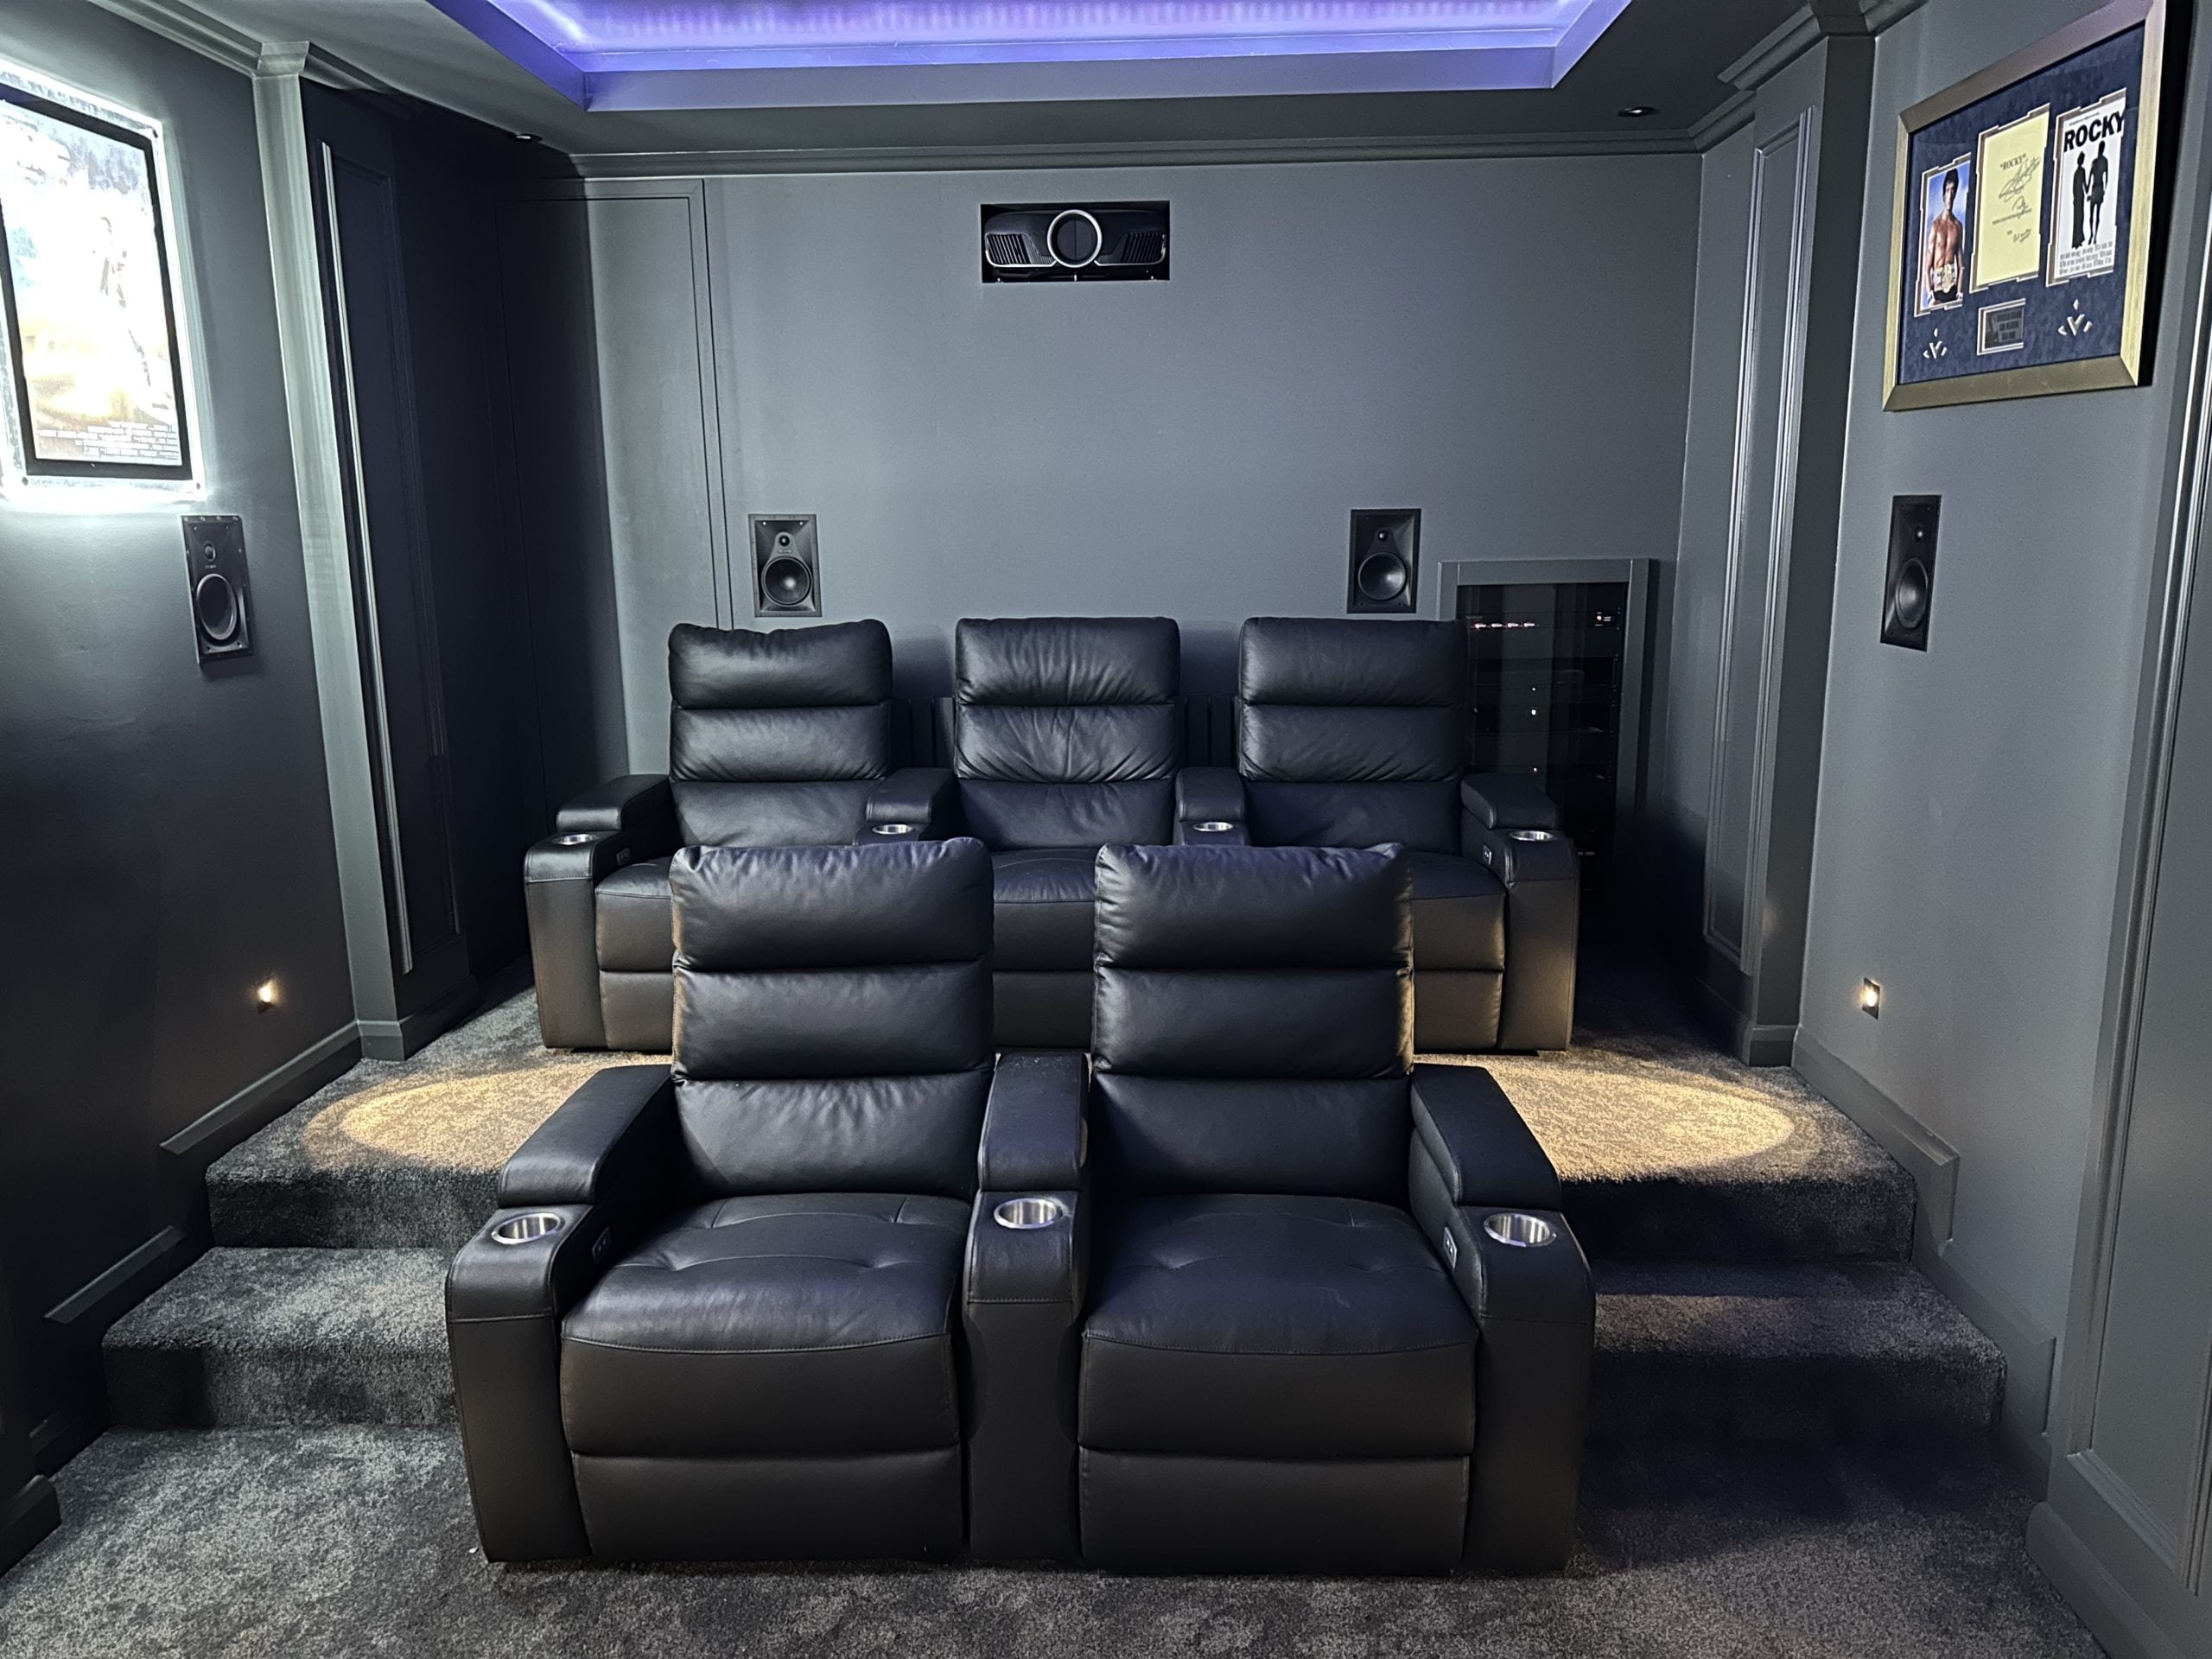 Home cinema seating